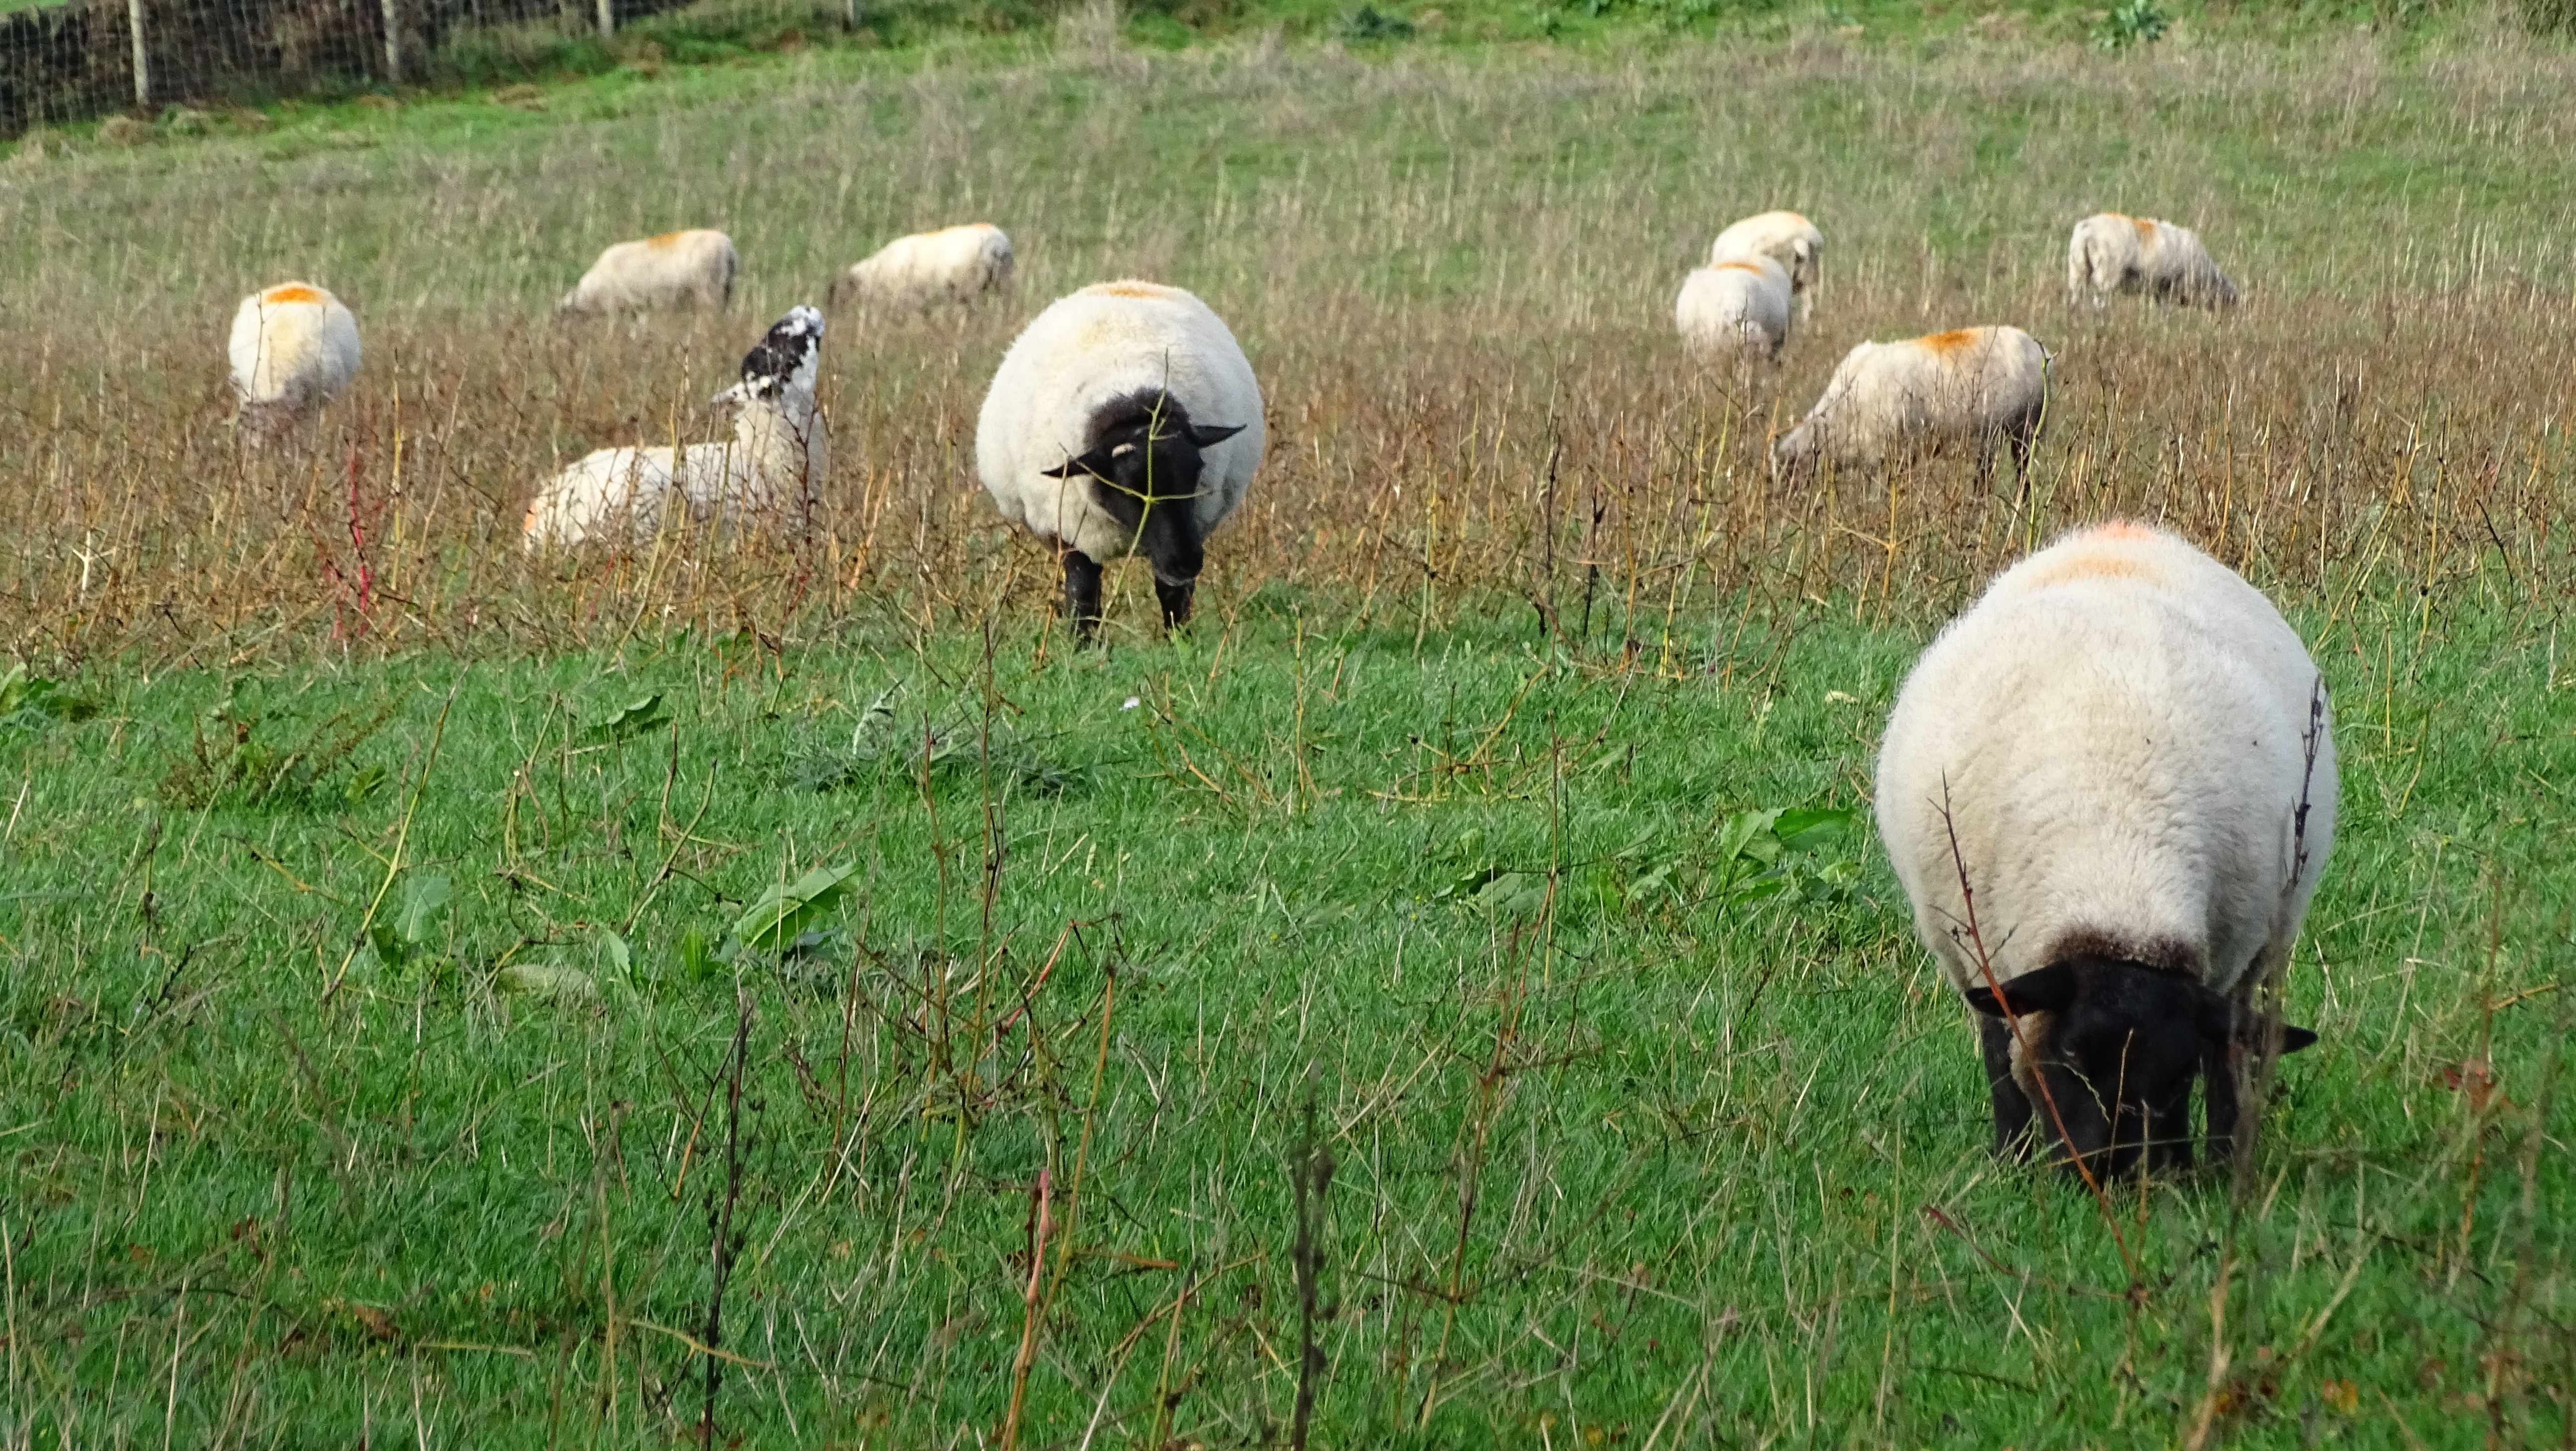 sheep eating grass at daytime